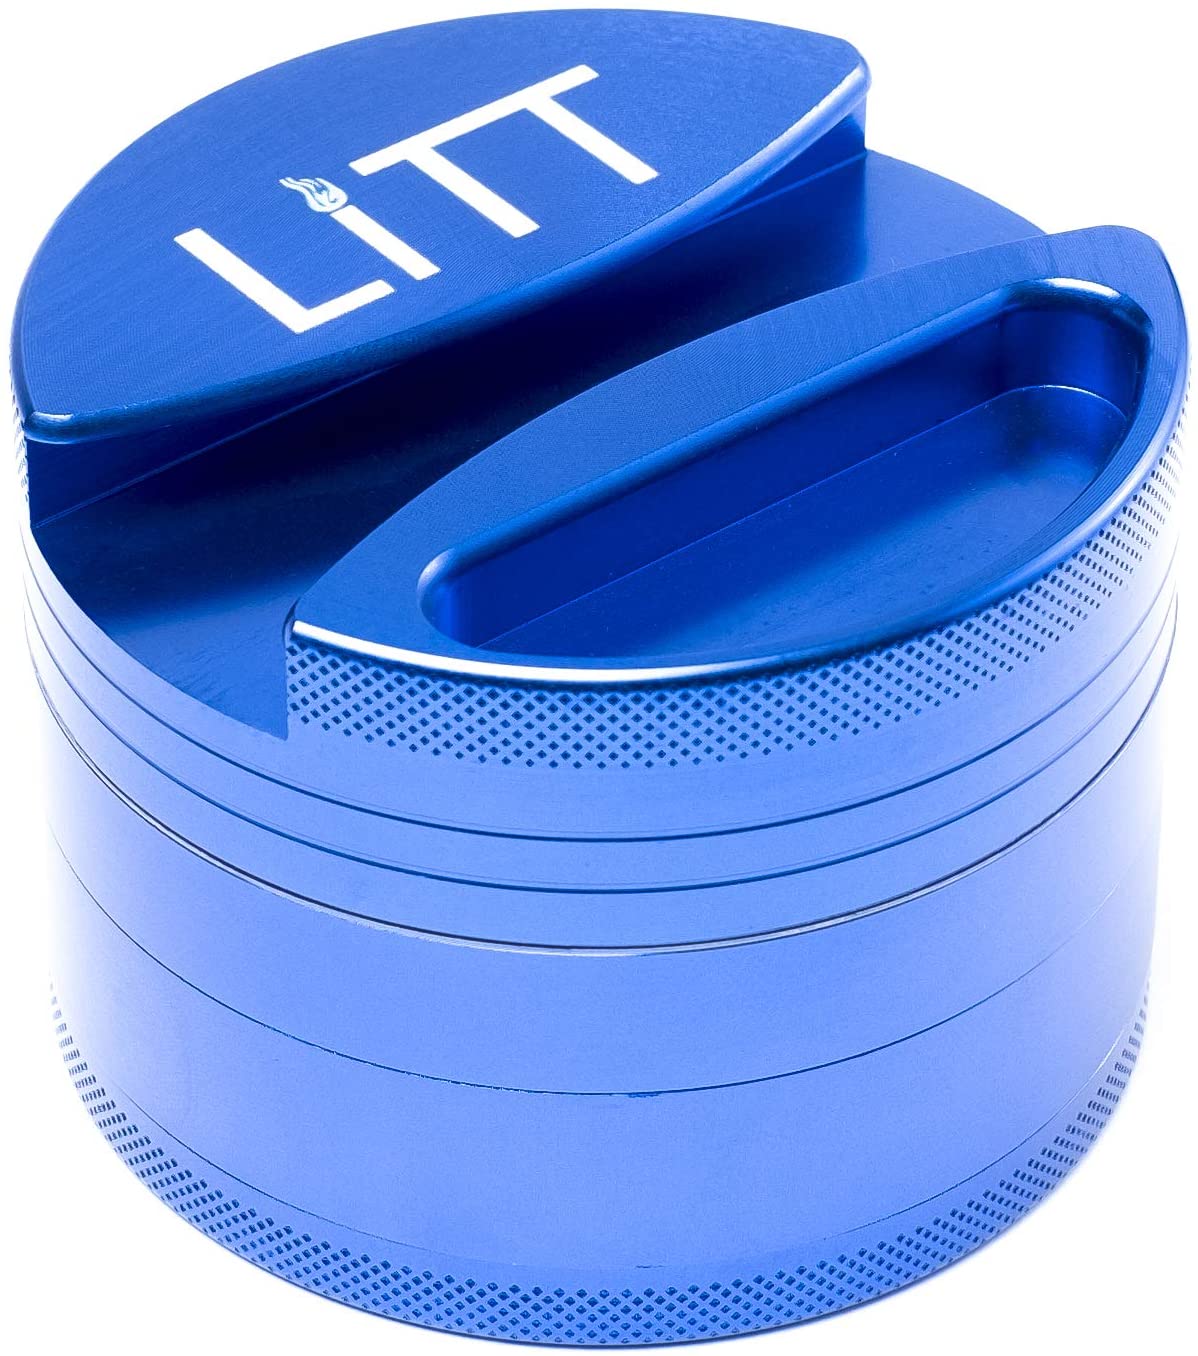 LiTT Premium Grinder - XL Aluminium Grinder with 4 Chambers